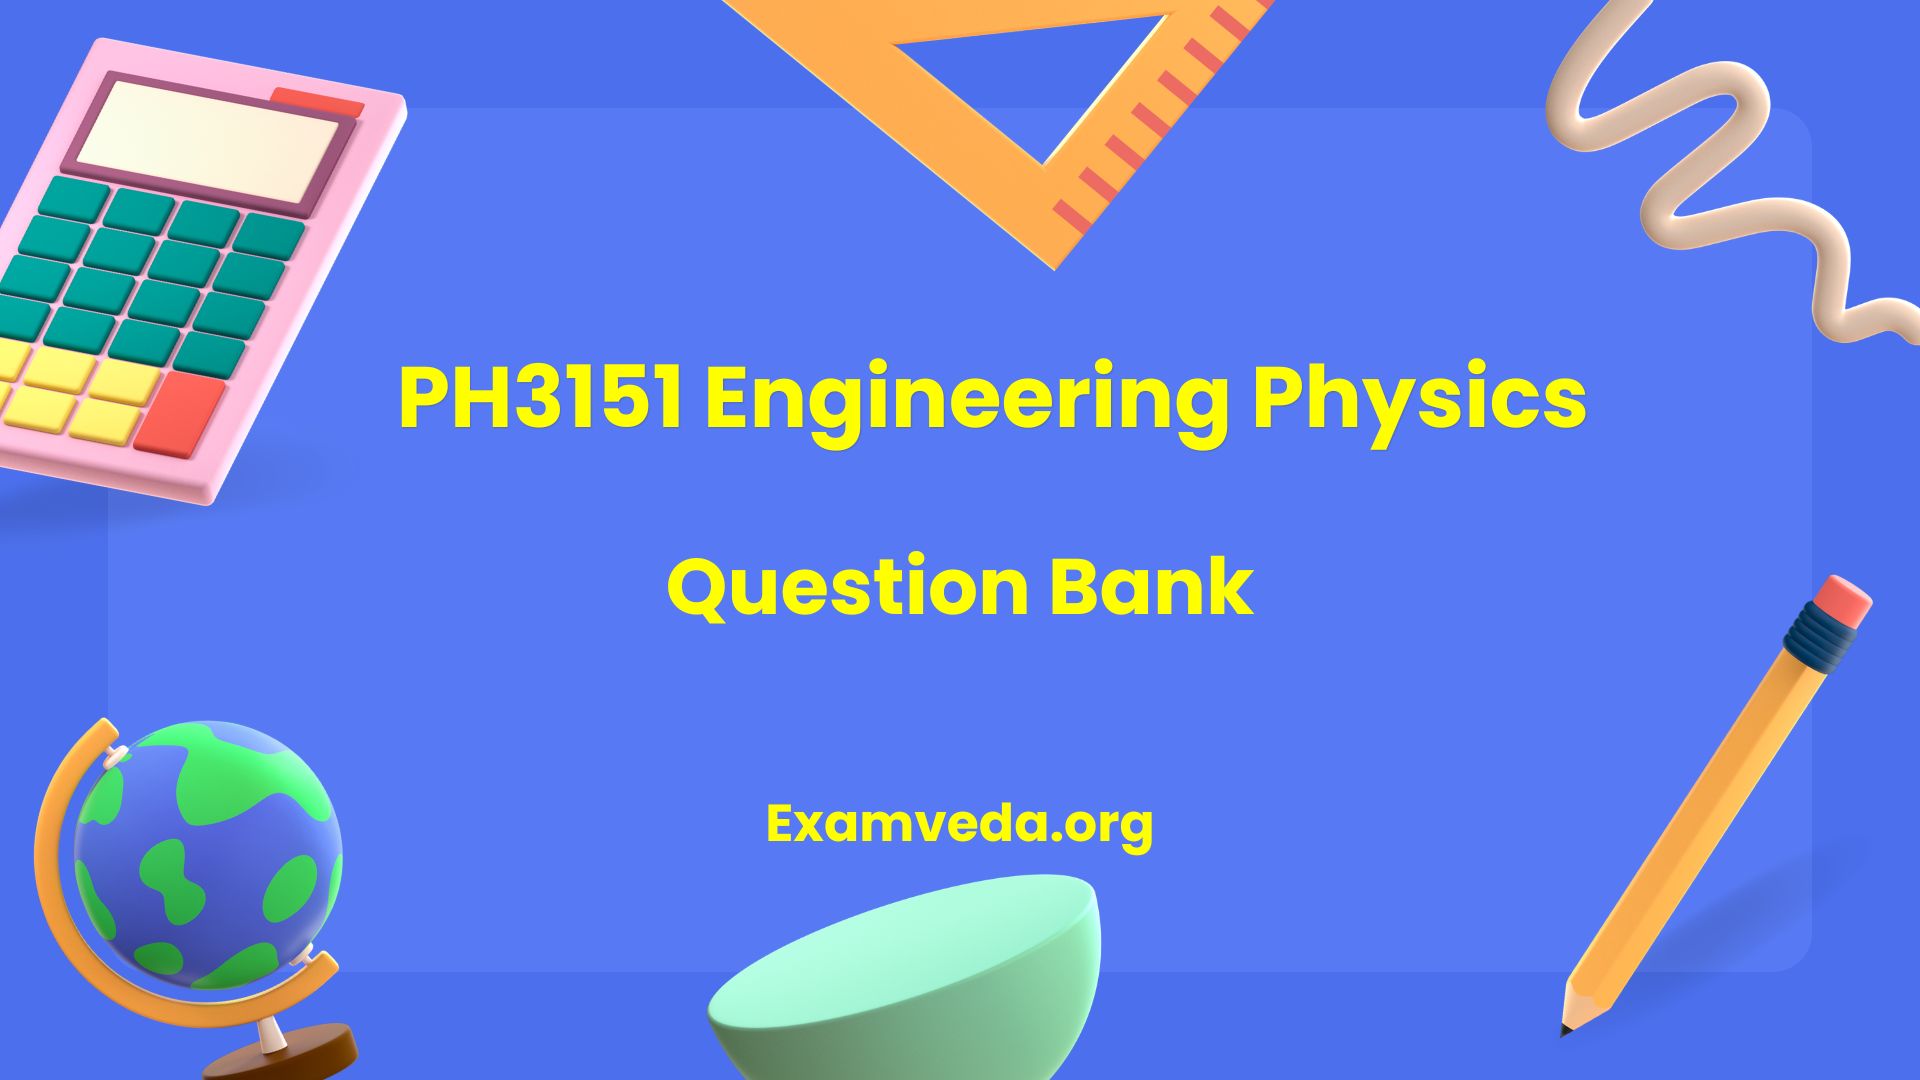 PH3151 Engineering Physics Question Bank